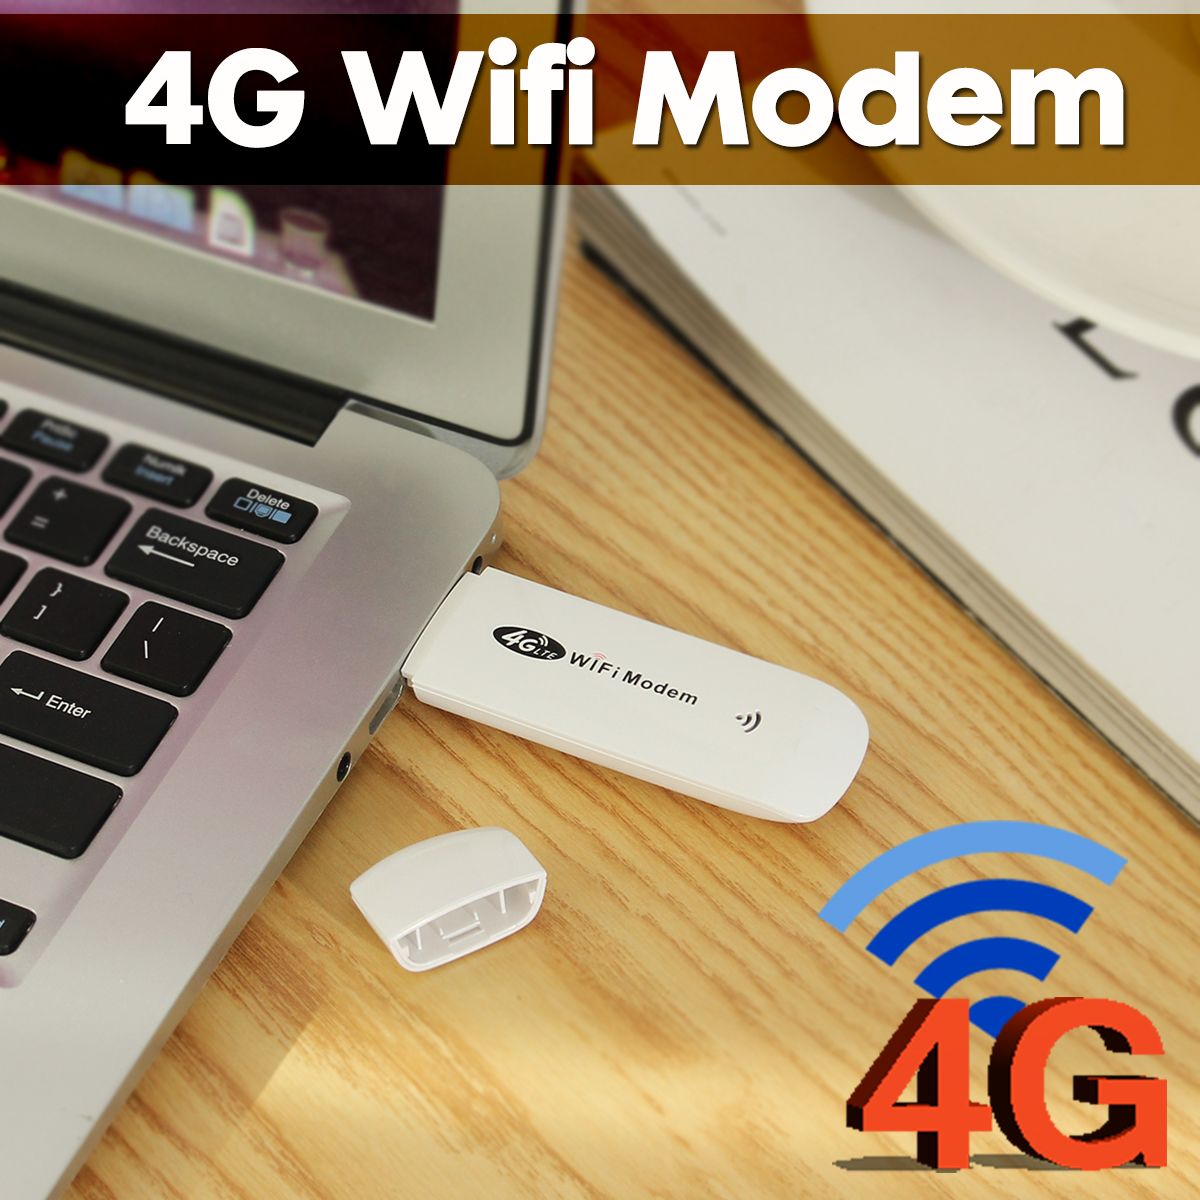 150Mbps-4G-USB-Dongle-Hotspot-Mobile-Broadband-WiFi-Router-Modem-Unlocked-WiFi-Module-1635842